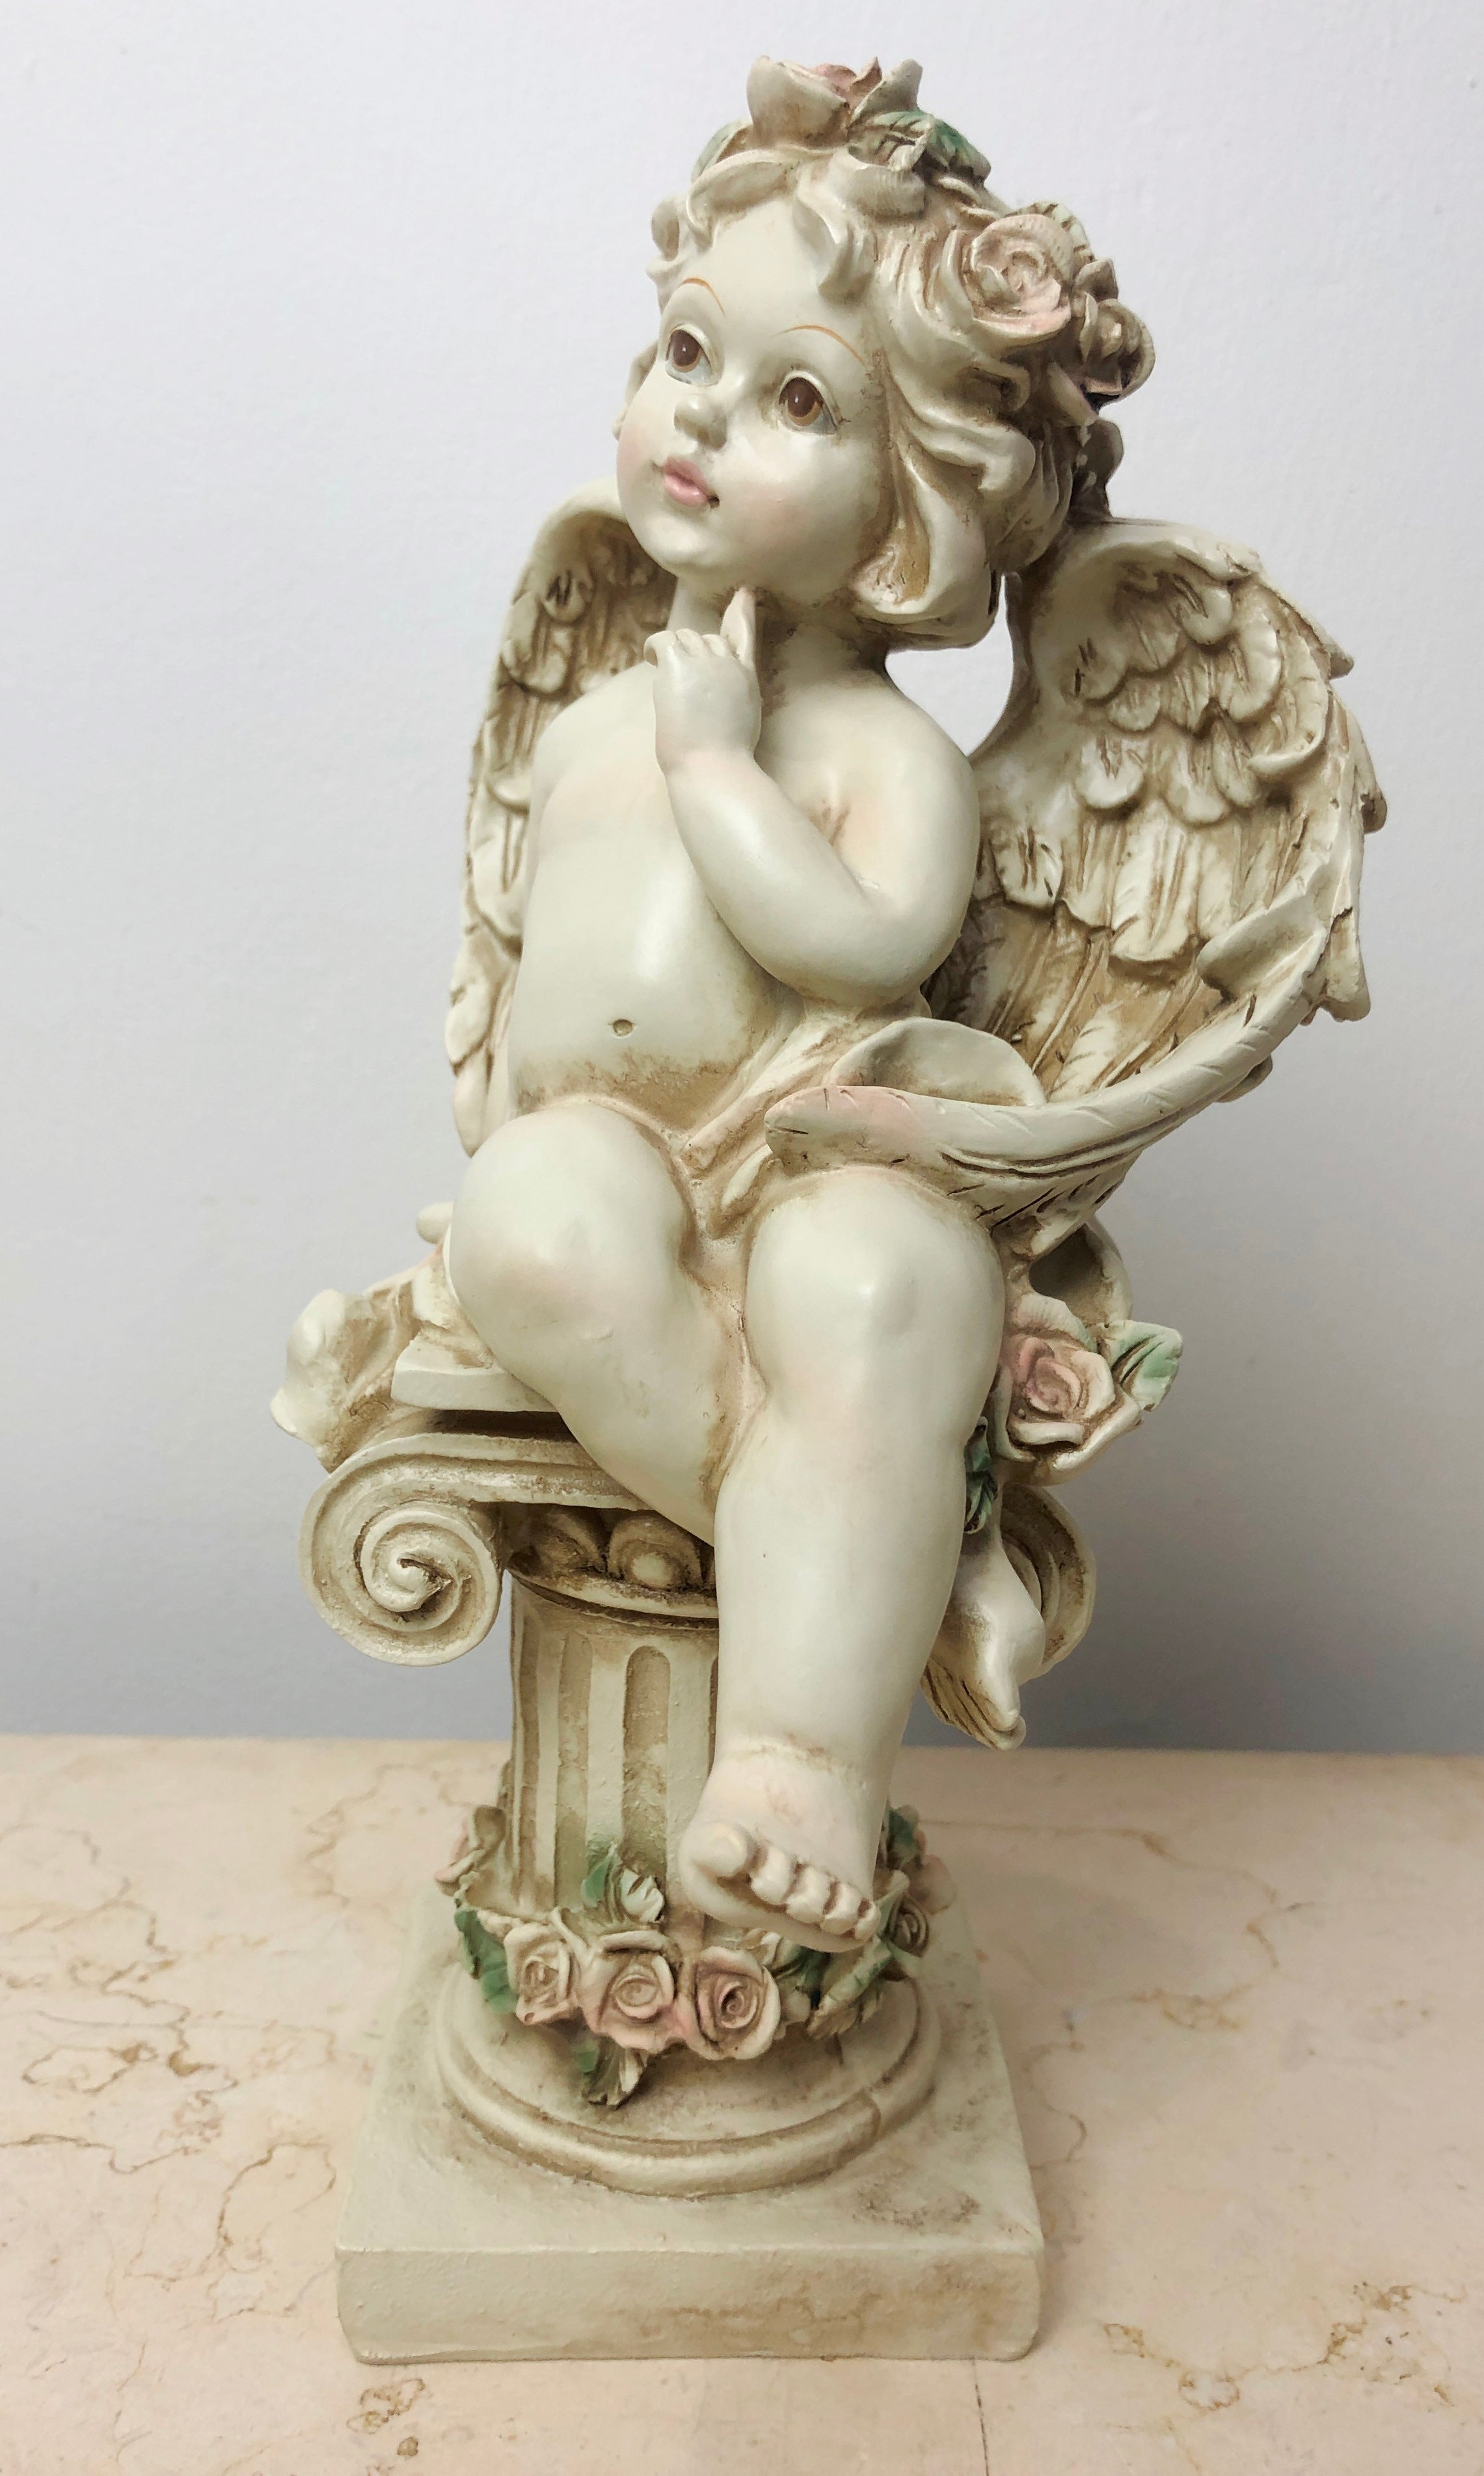 Vintage Hand Made Cherub / Cupid Ornament | eXibit collection